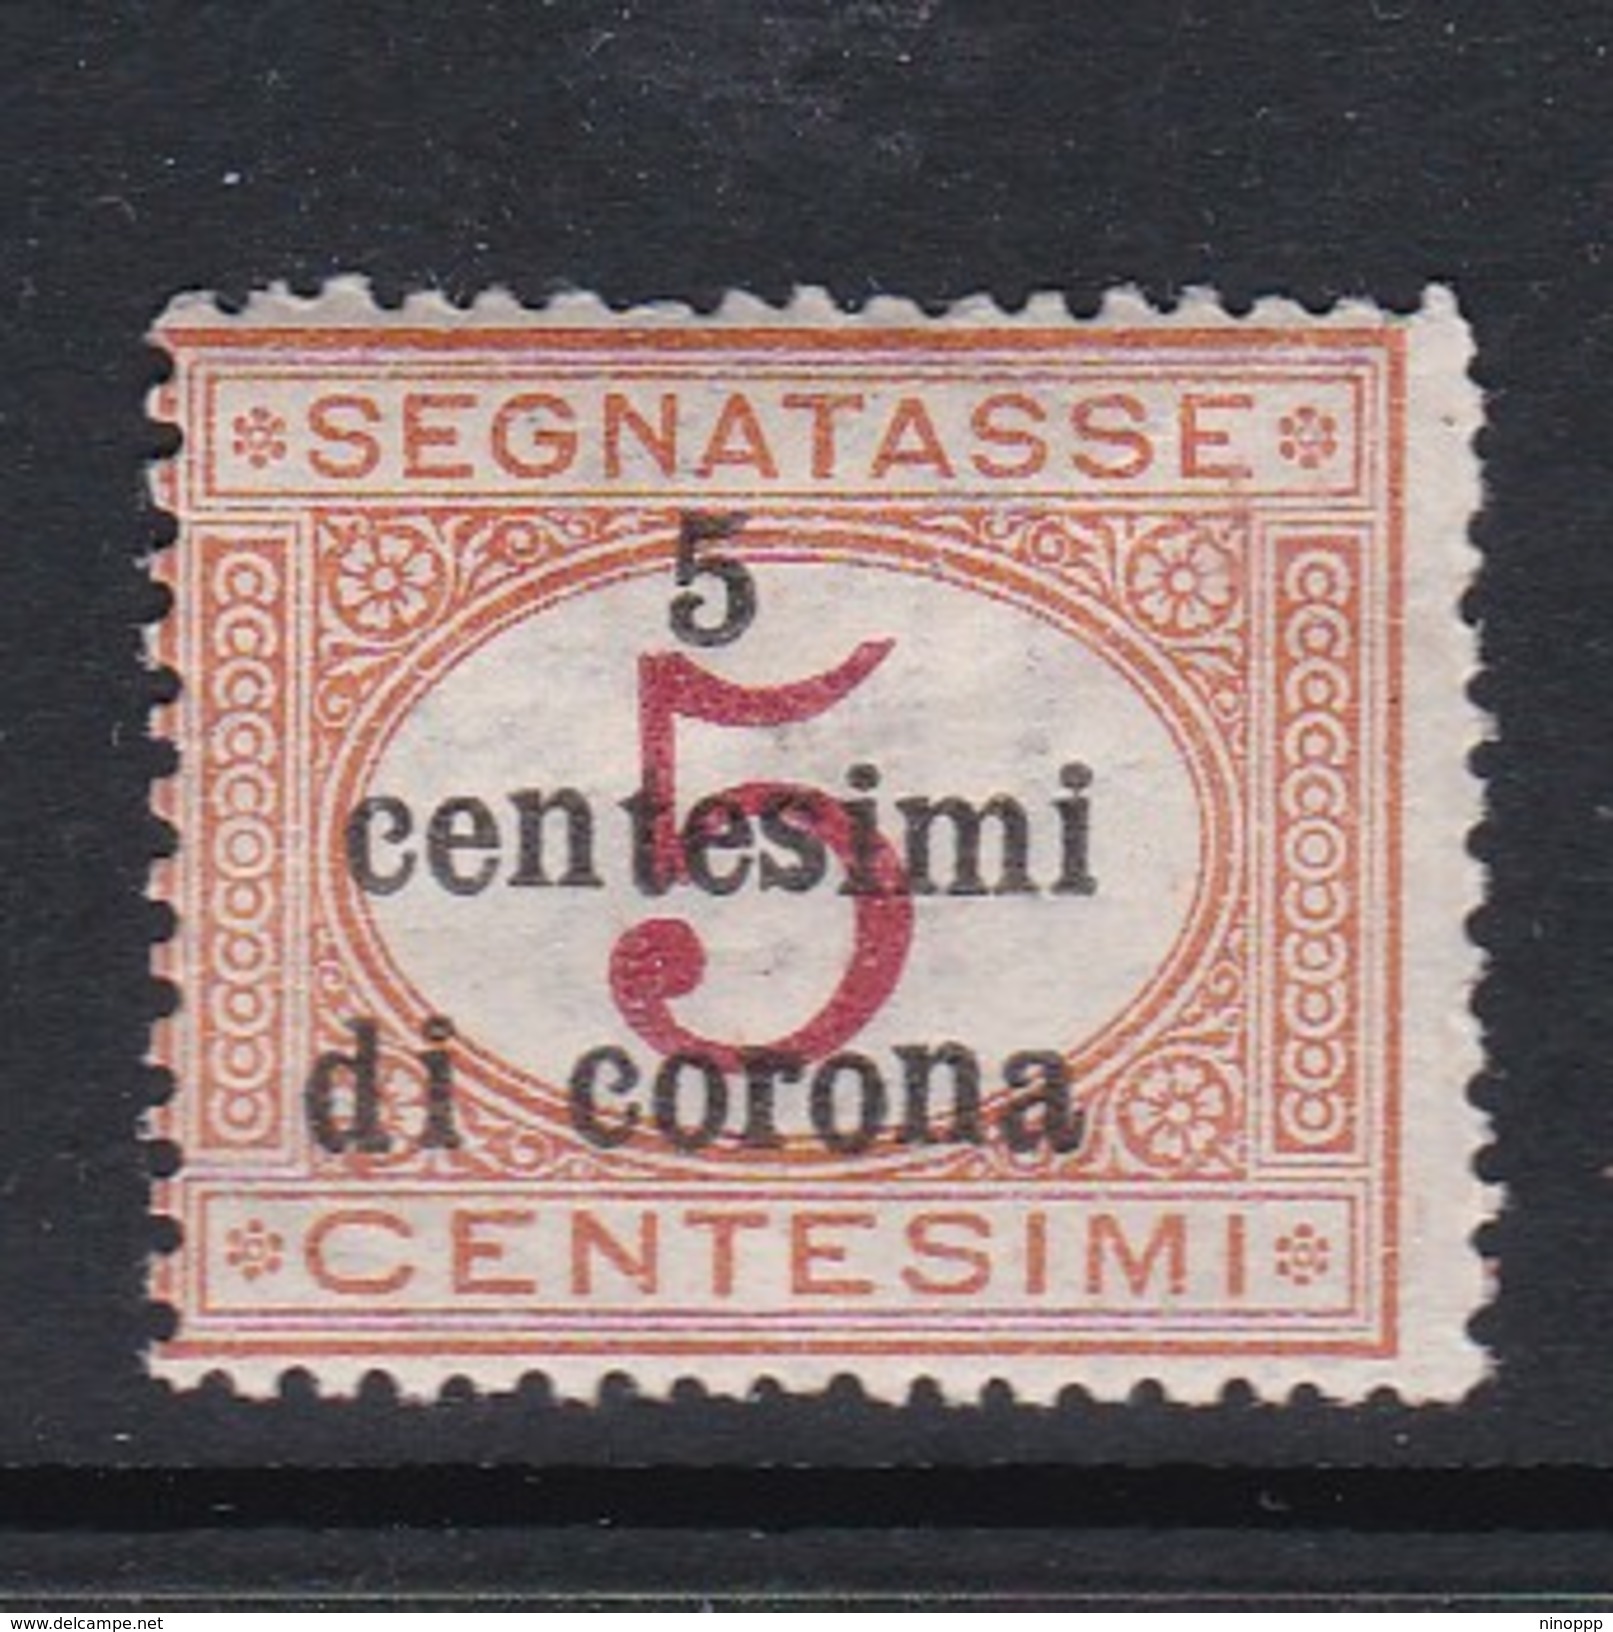 Venezia Giulia NJ8 1919 Italian Stamps Overprinted5c On 5c Buff And Magenta Mint Never Hinged - Oostenrijkse Bezetting